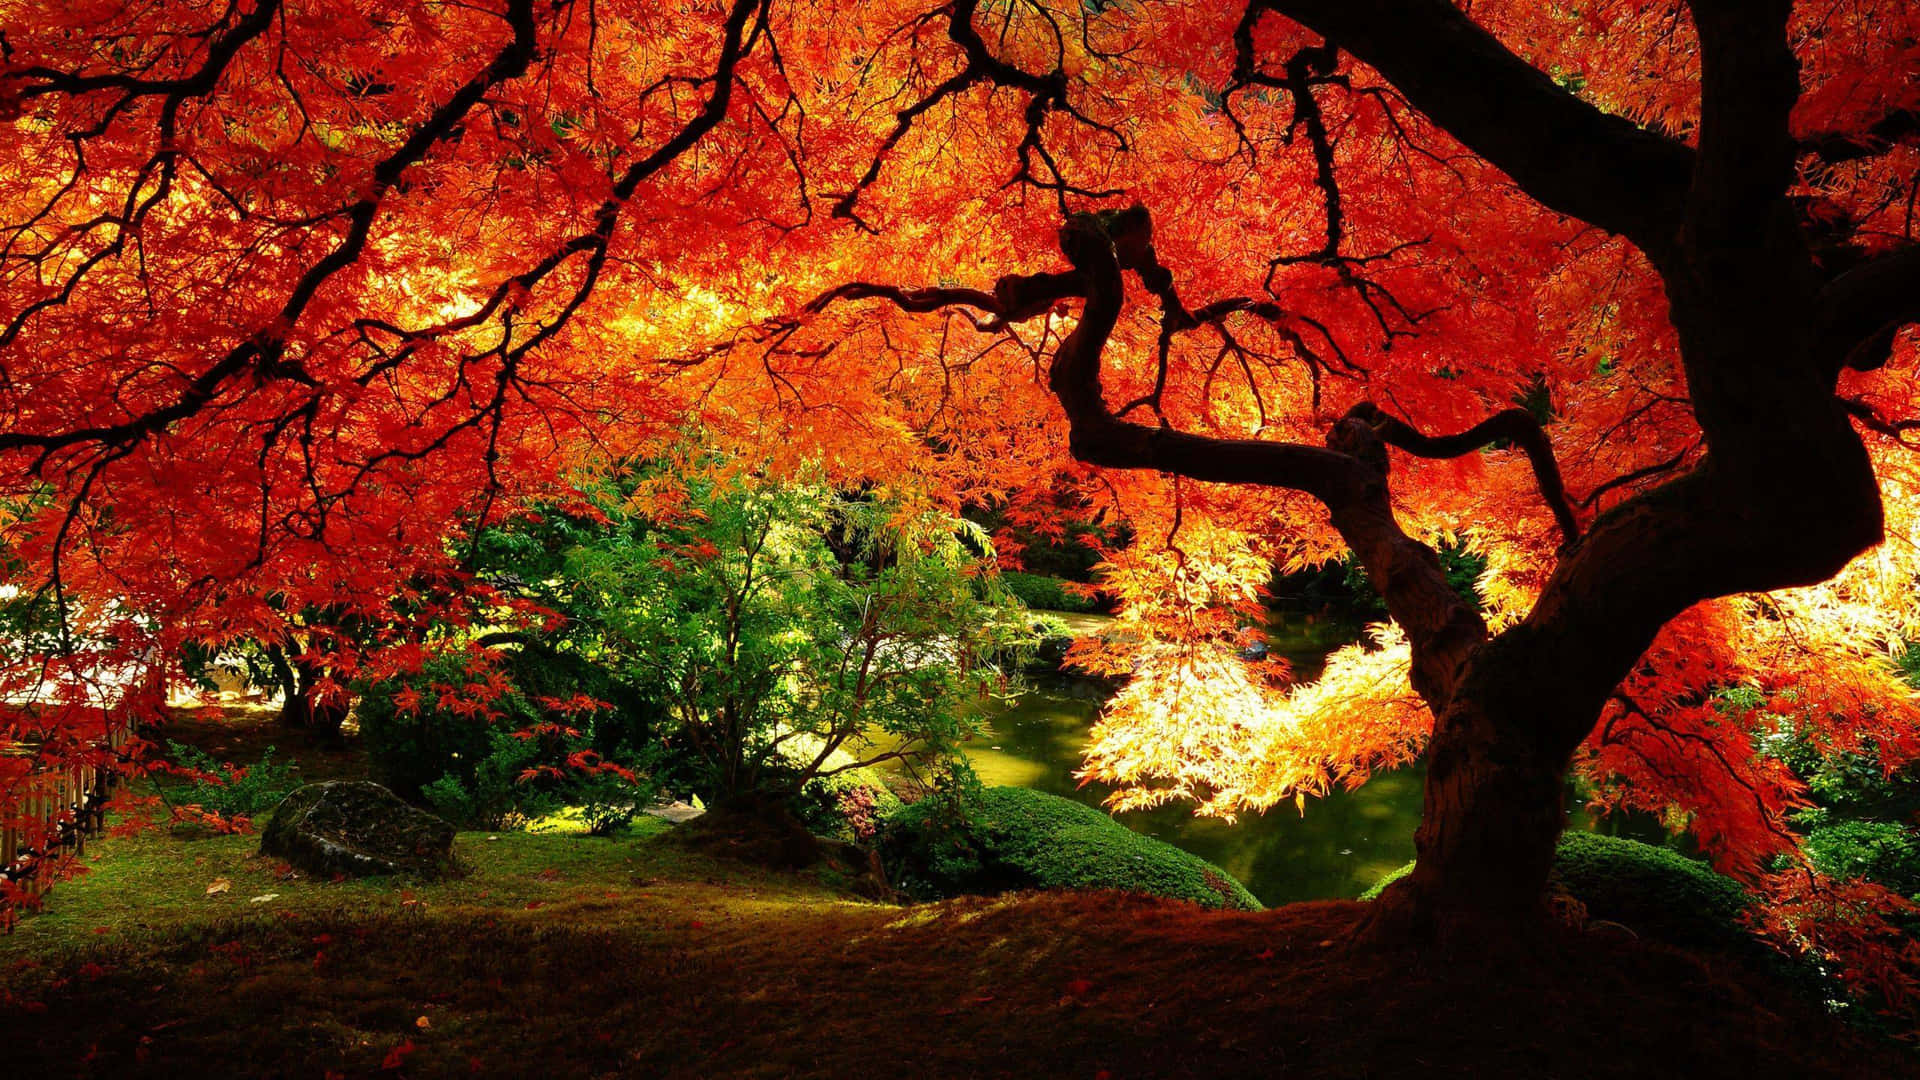 The majestic colors of the fall season